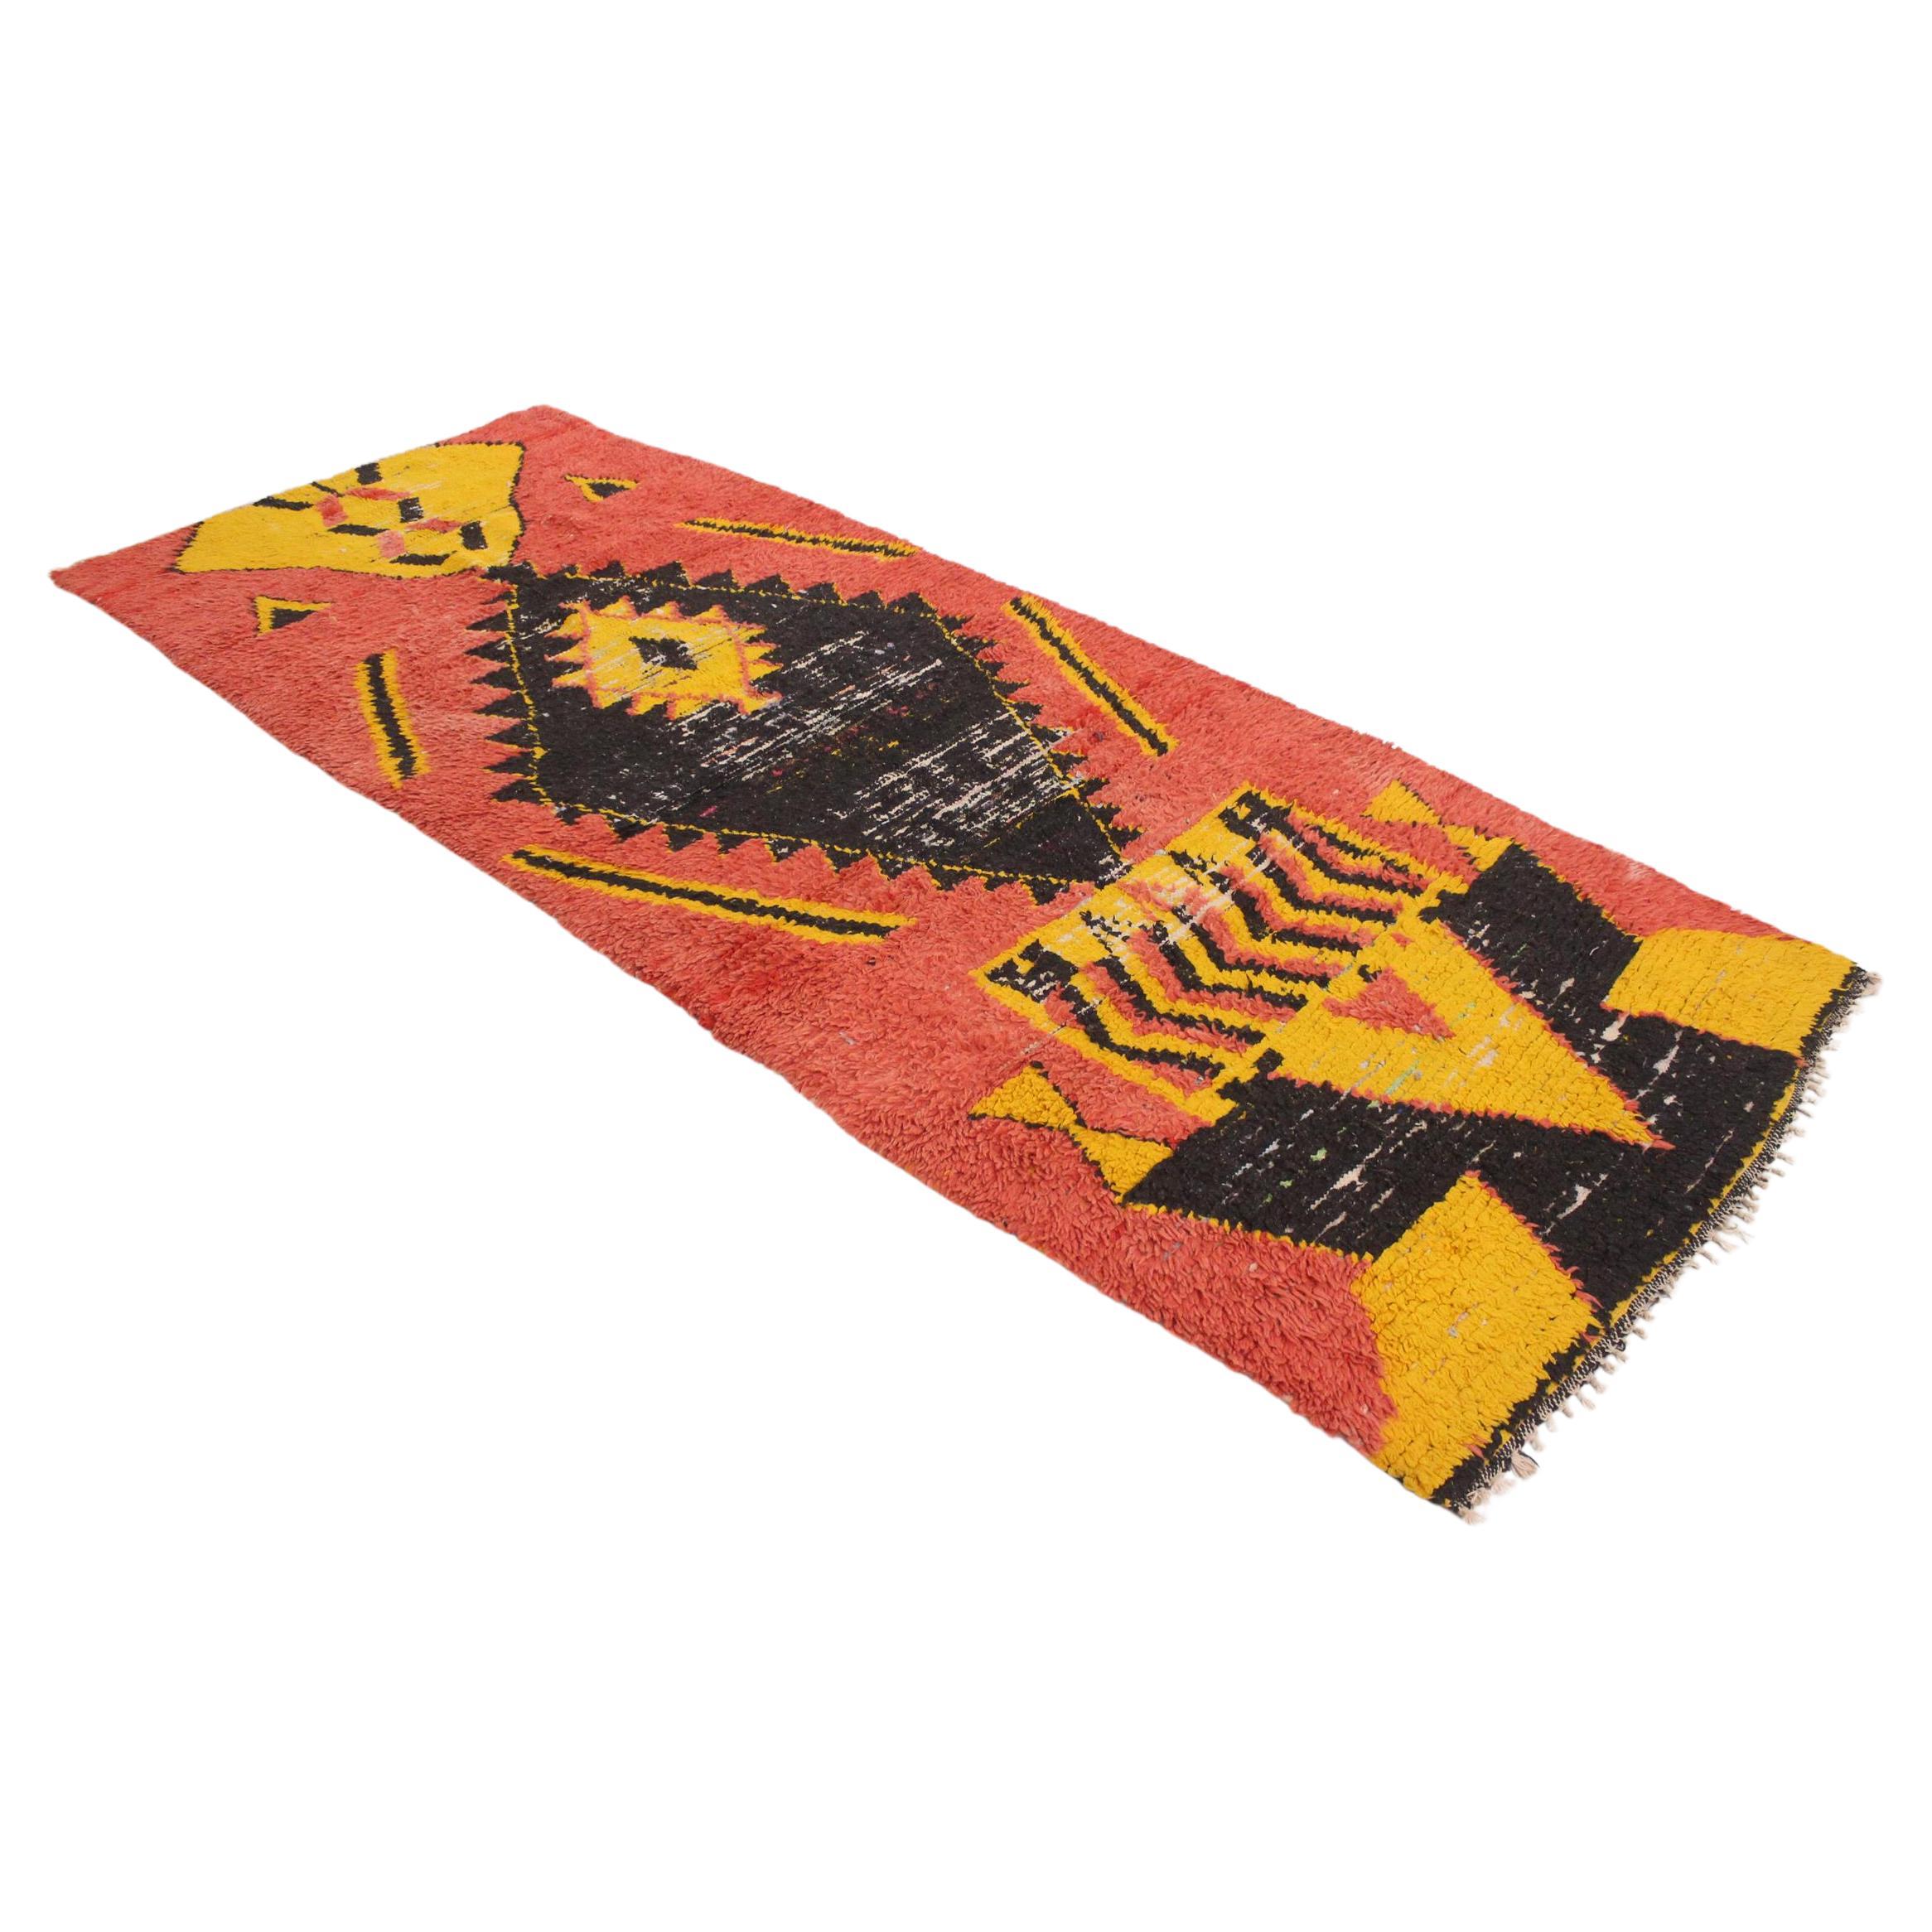 Vintage Moroccan Boucherouite rug- Orange/black/yellow - 3.6x8.8feet / 110x268cm For Sale